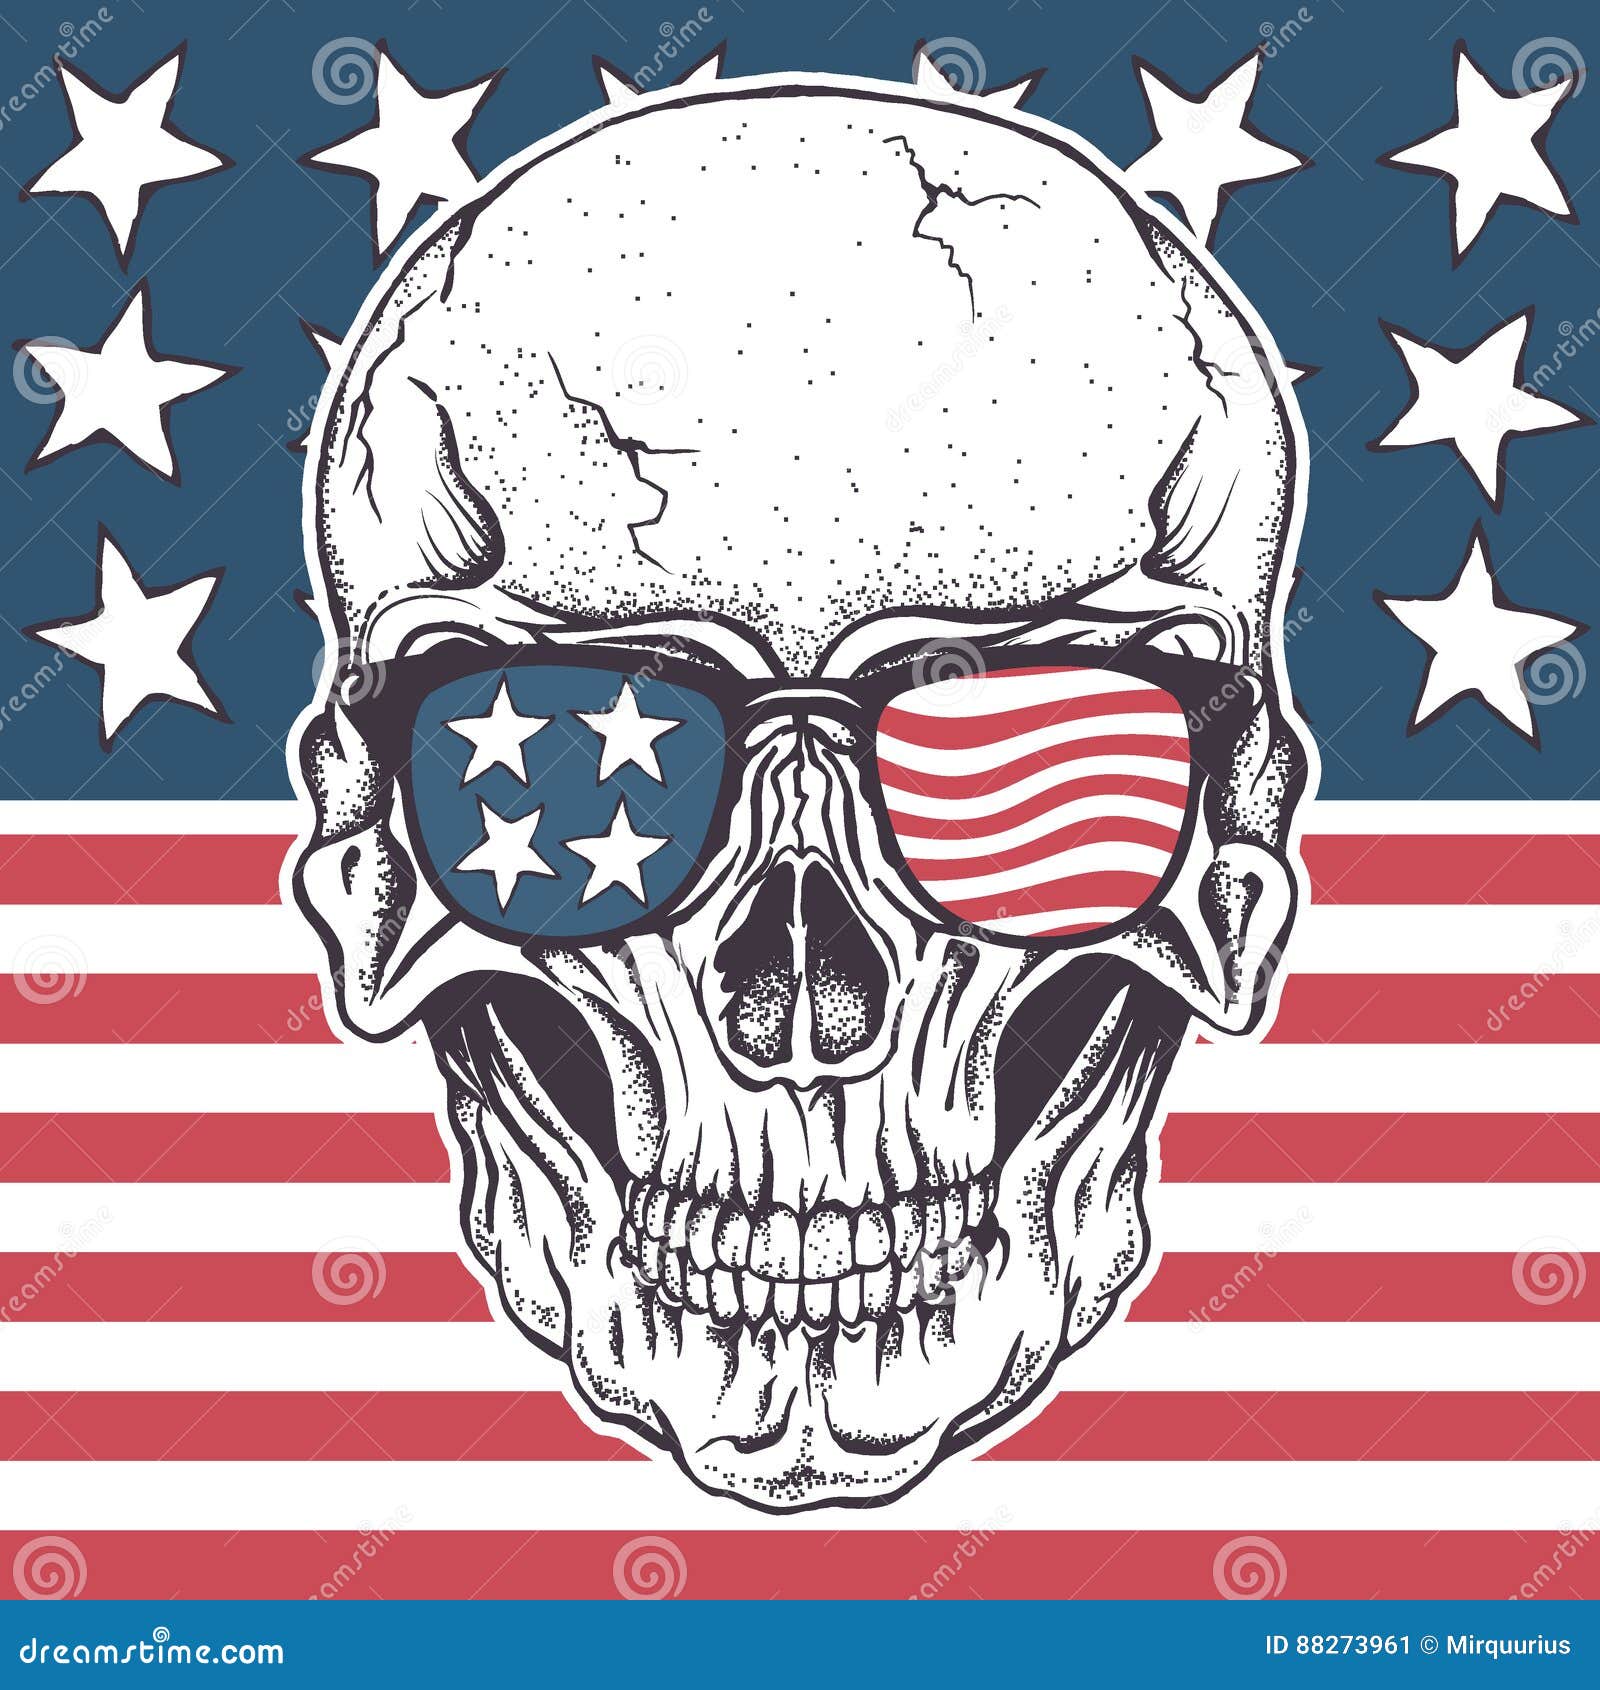 Twitter 上的 Wylde Sydes Tattoo  Body PiercingHalf Rams HeadSkull with American  Flag By Jesus httpstco3UZuHLgjvj tattoo tattoos ink inked  sandiego wyldesydestattoo sandiegotattooartist americanflag  americanflagtattoo flagtattoo 